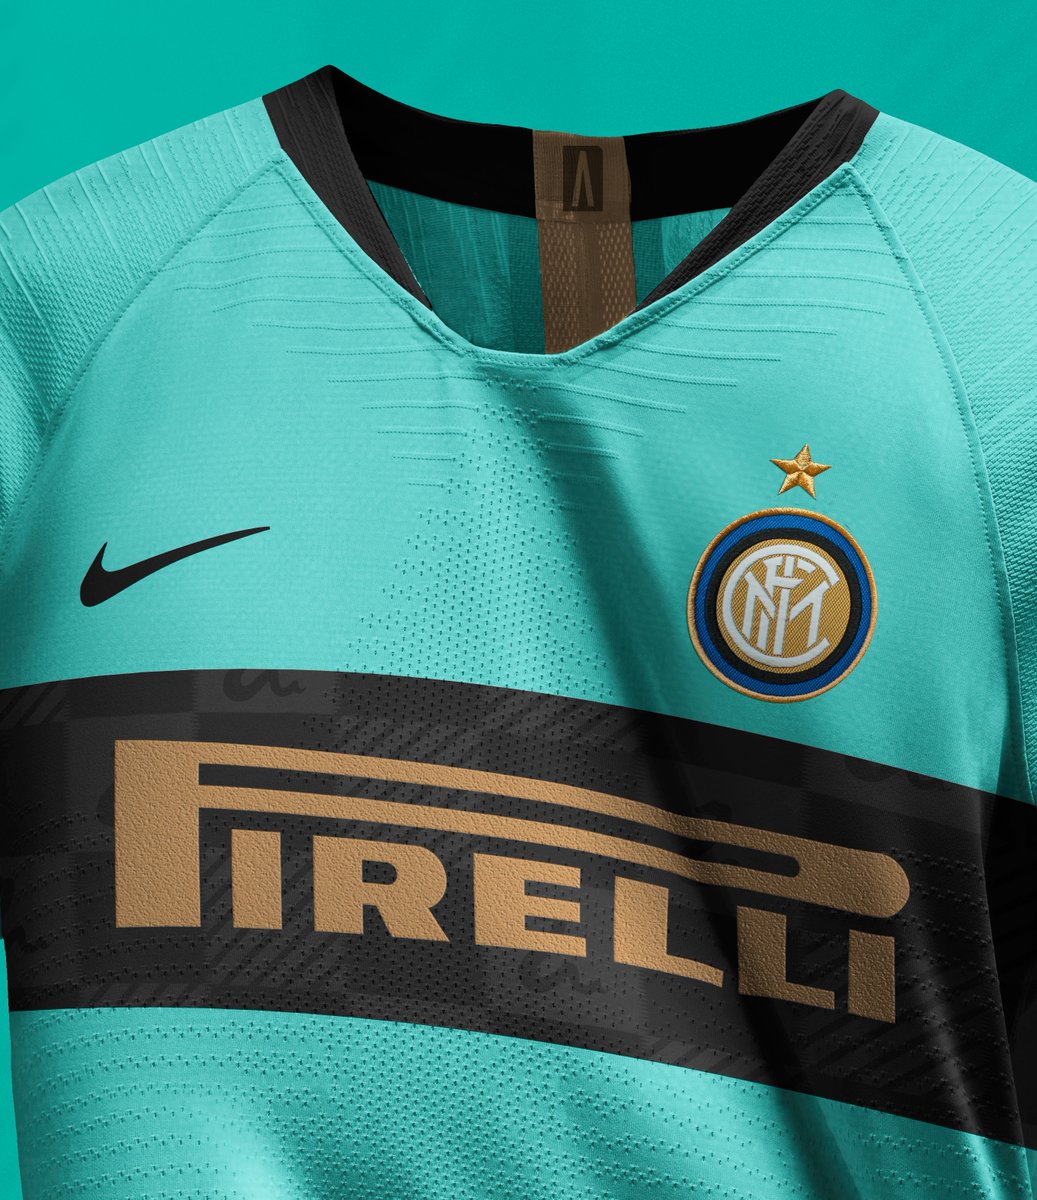 Unofficial - Inter 2019-2020 away kit 